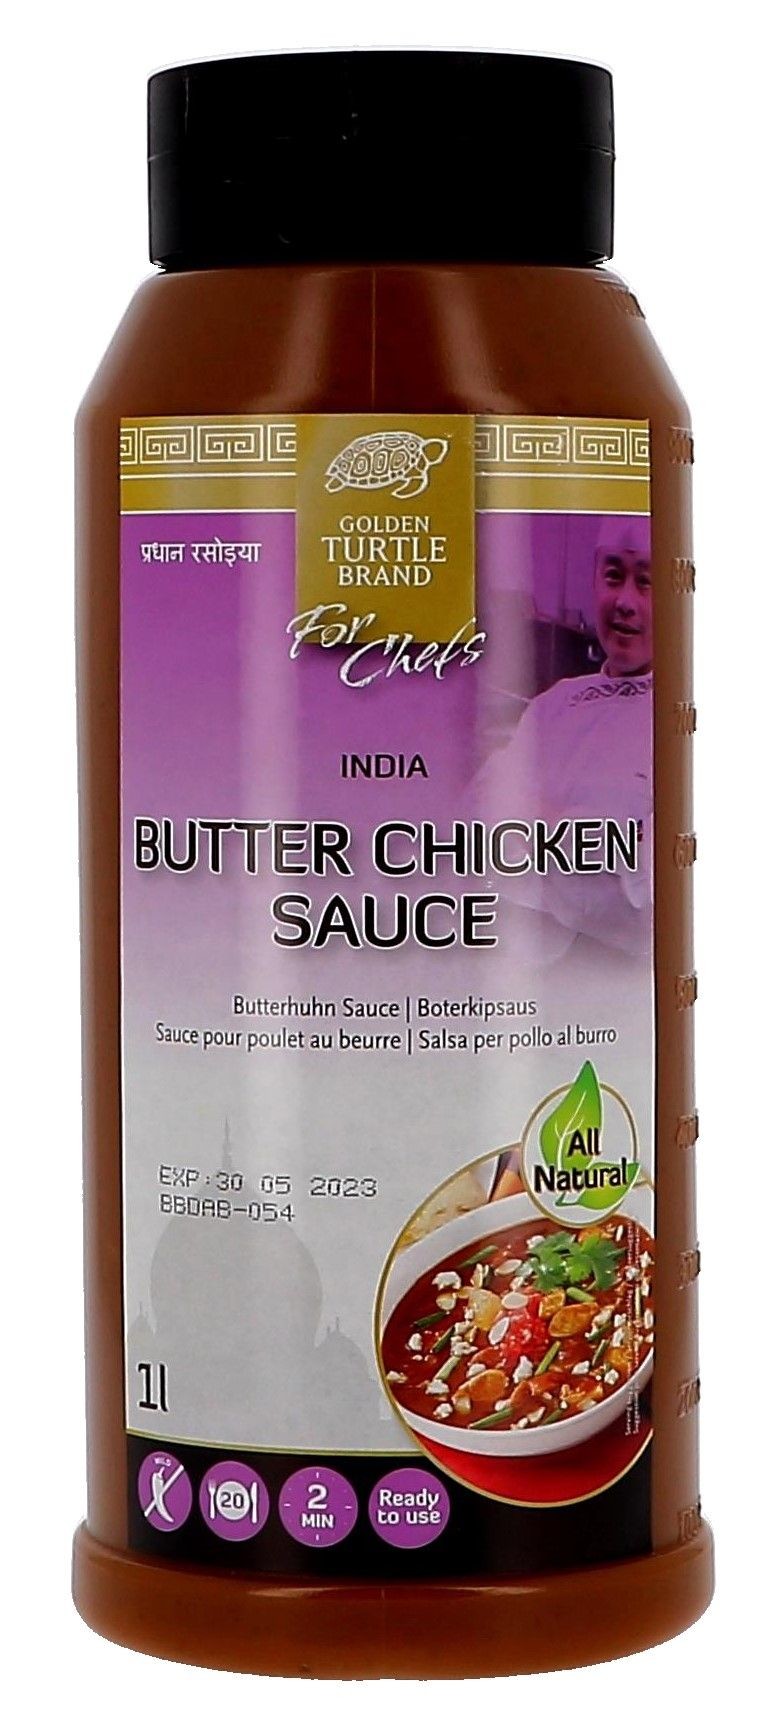 Butter Chicken Boterkip saus 1L Golden Turtle Brand for Chefs